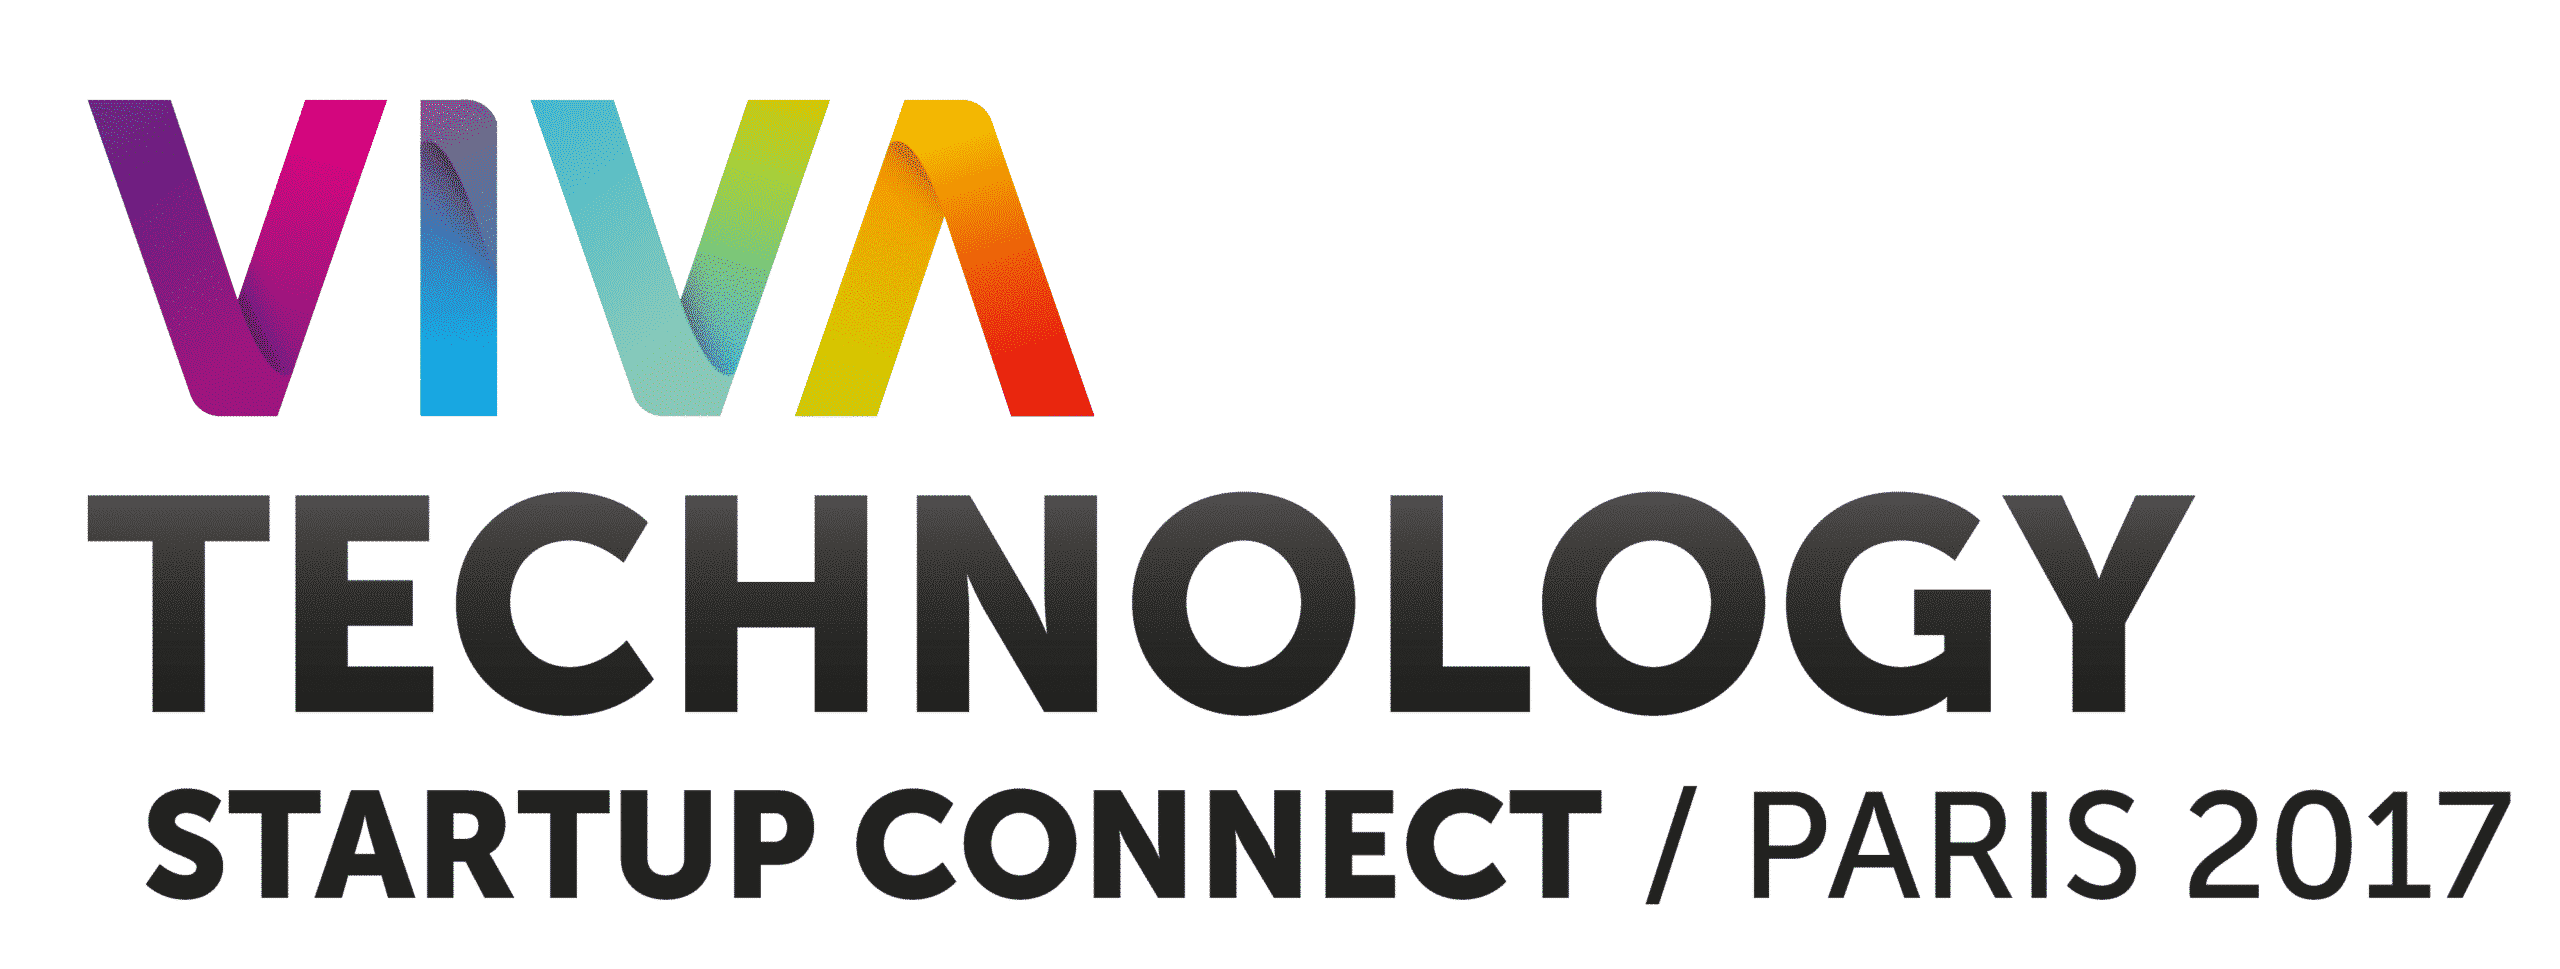 vivatechnology 2017